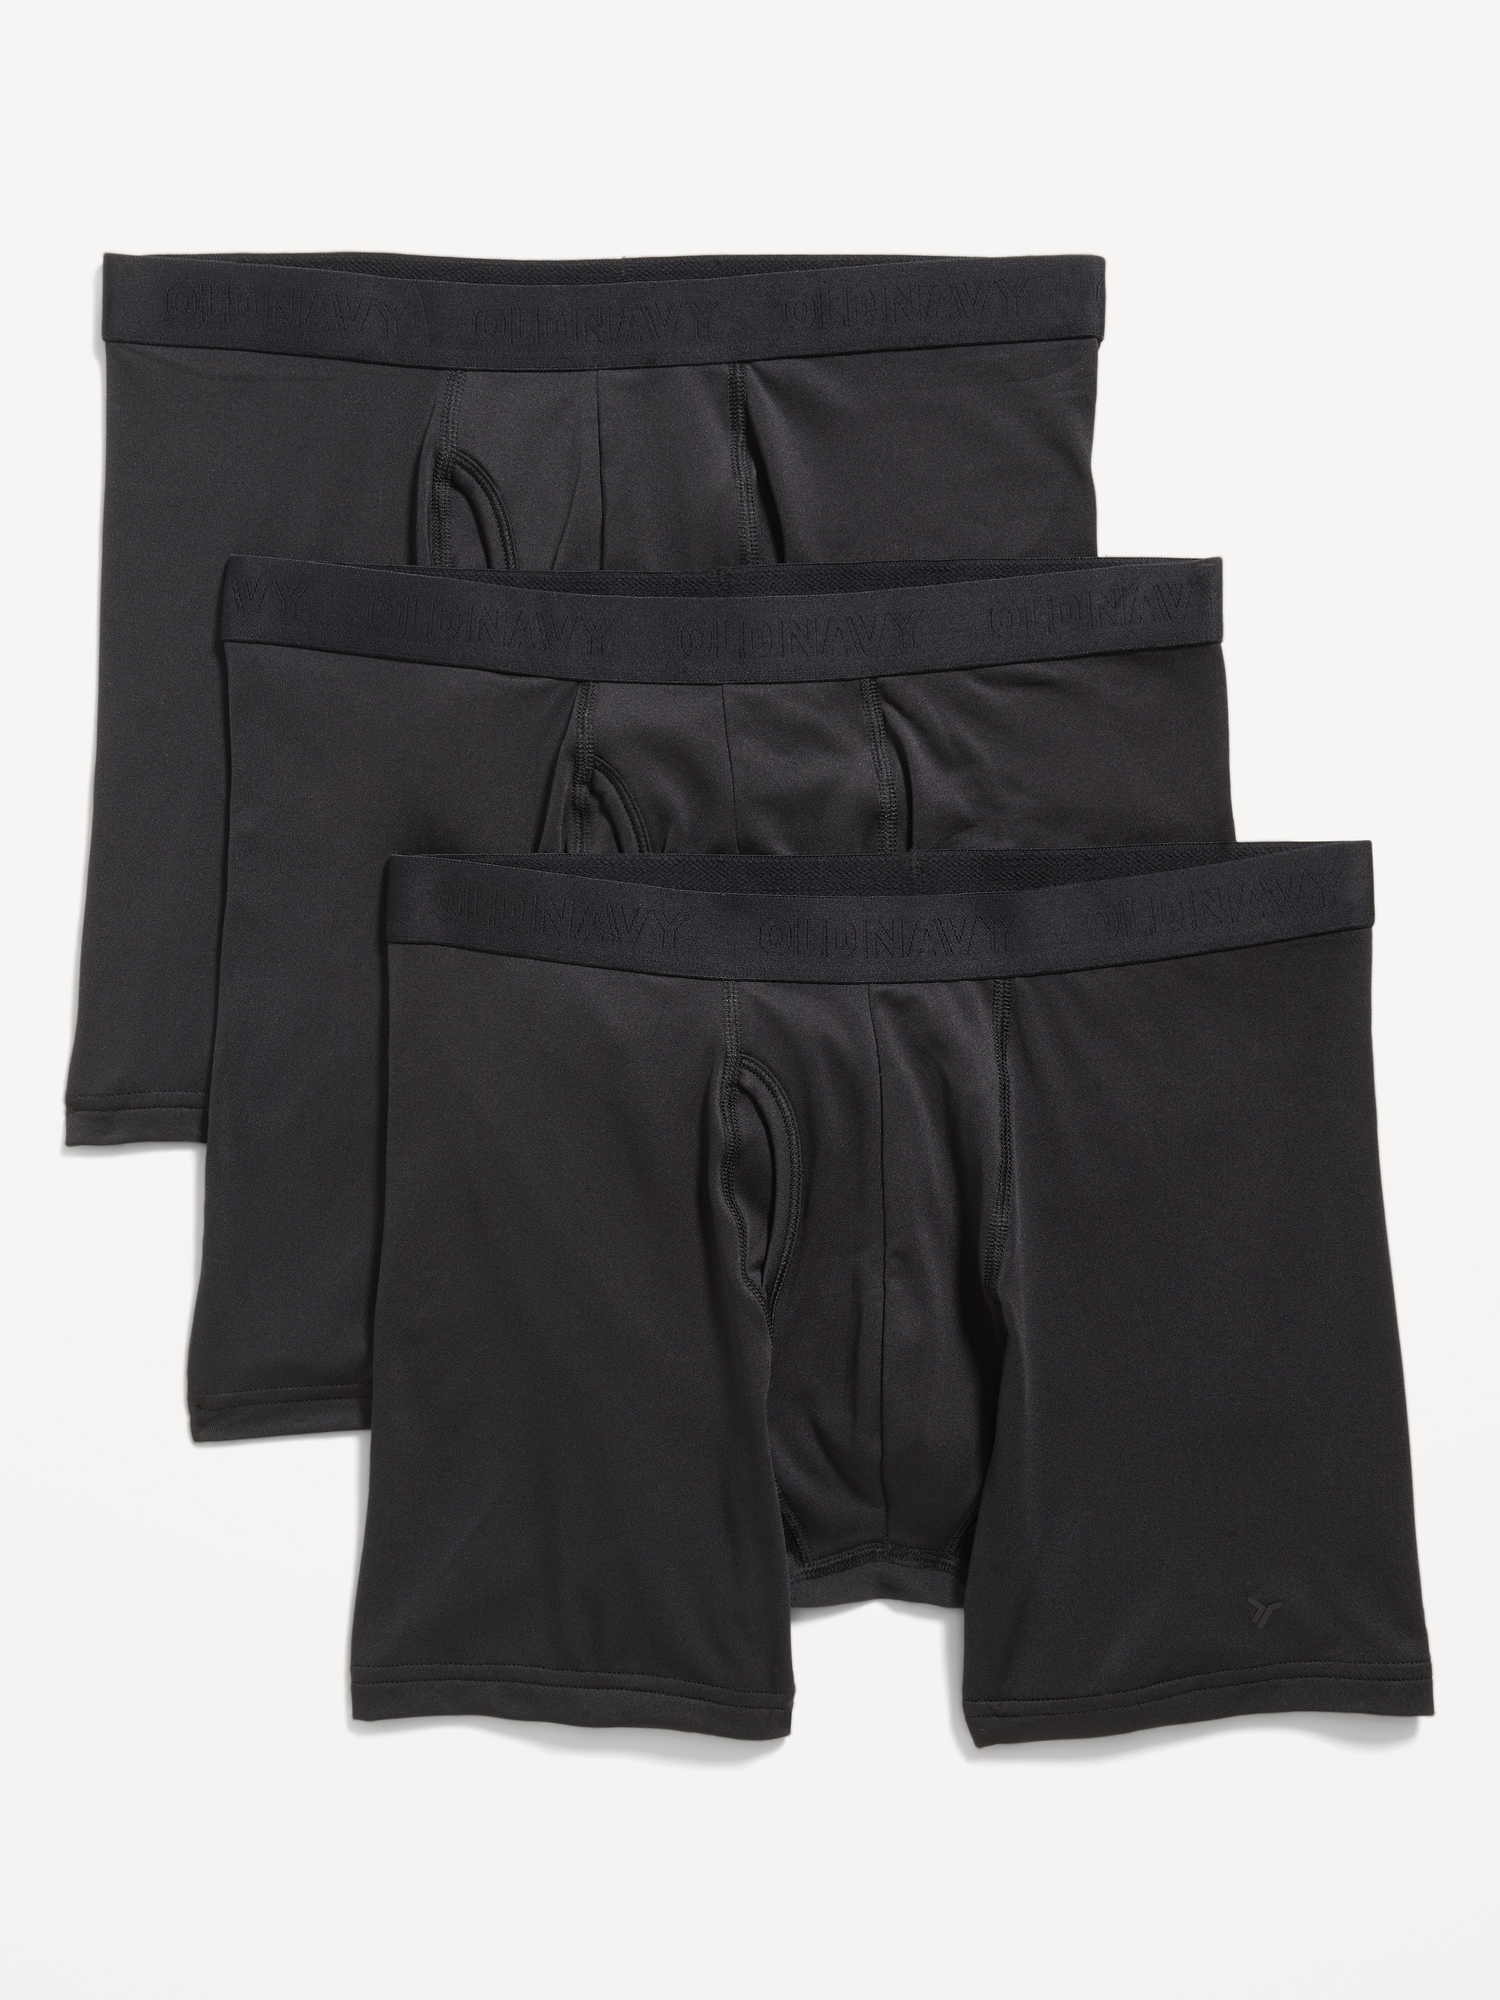 Go-Dry Cool Performance Boxer-Brief Underwear 3-Pack -- 5-inch inseam